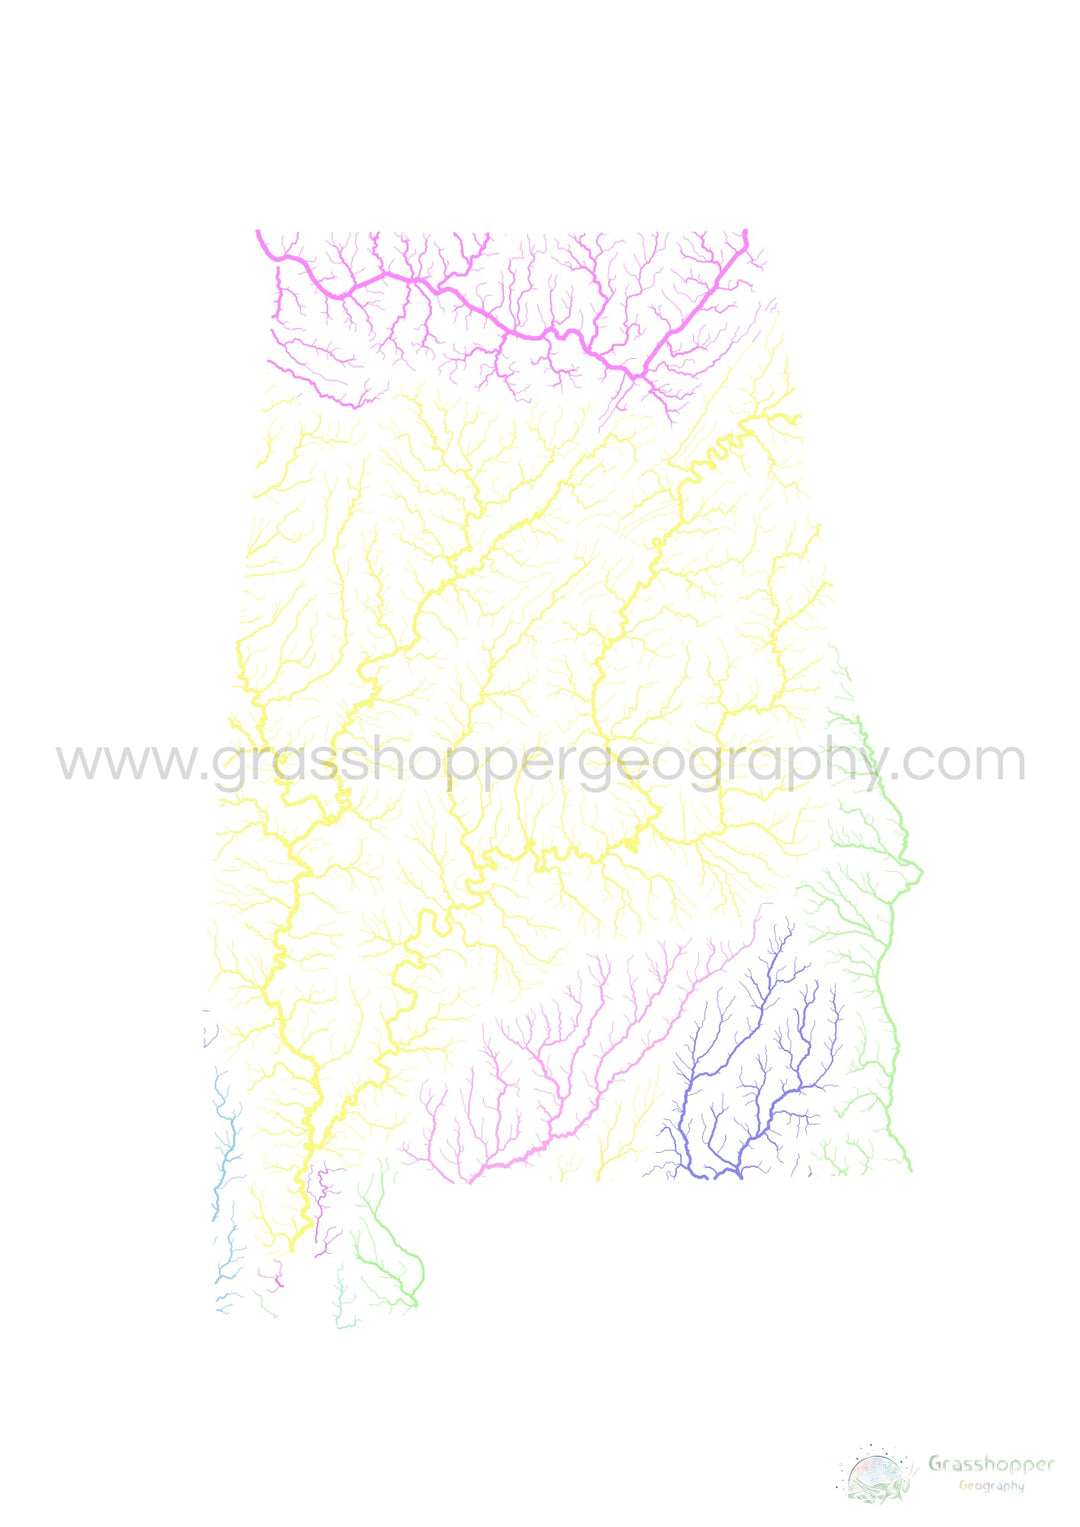 Alabama - River basin map, pastel on white - Fine Art Print